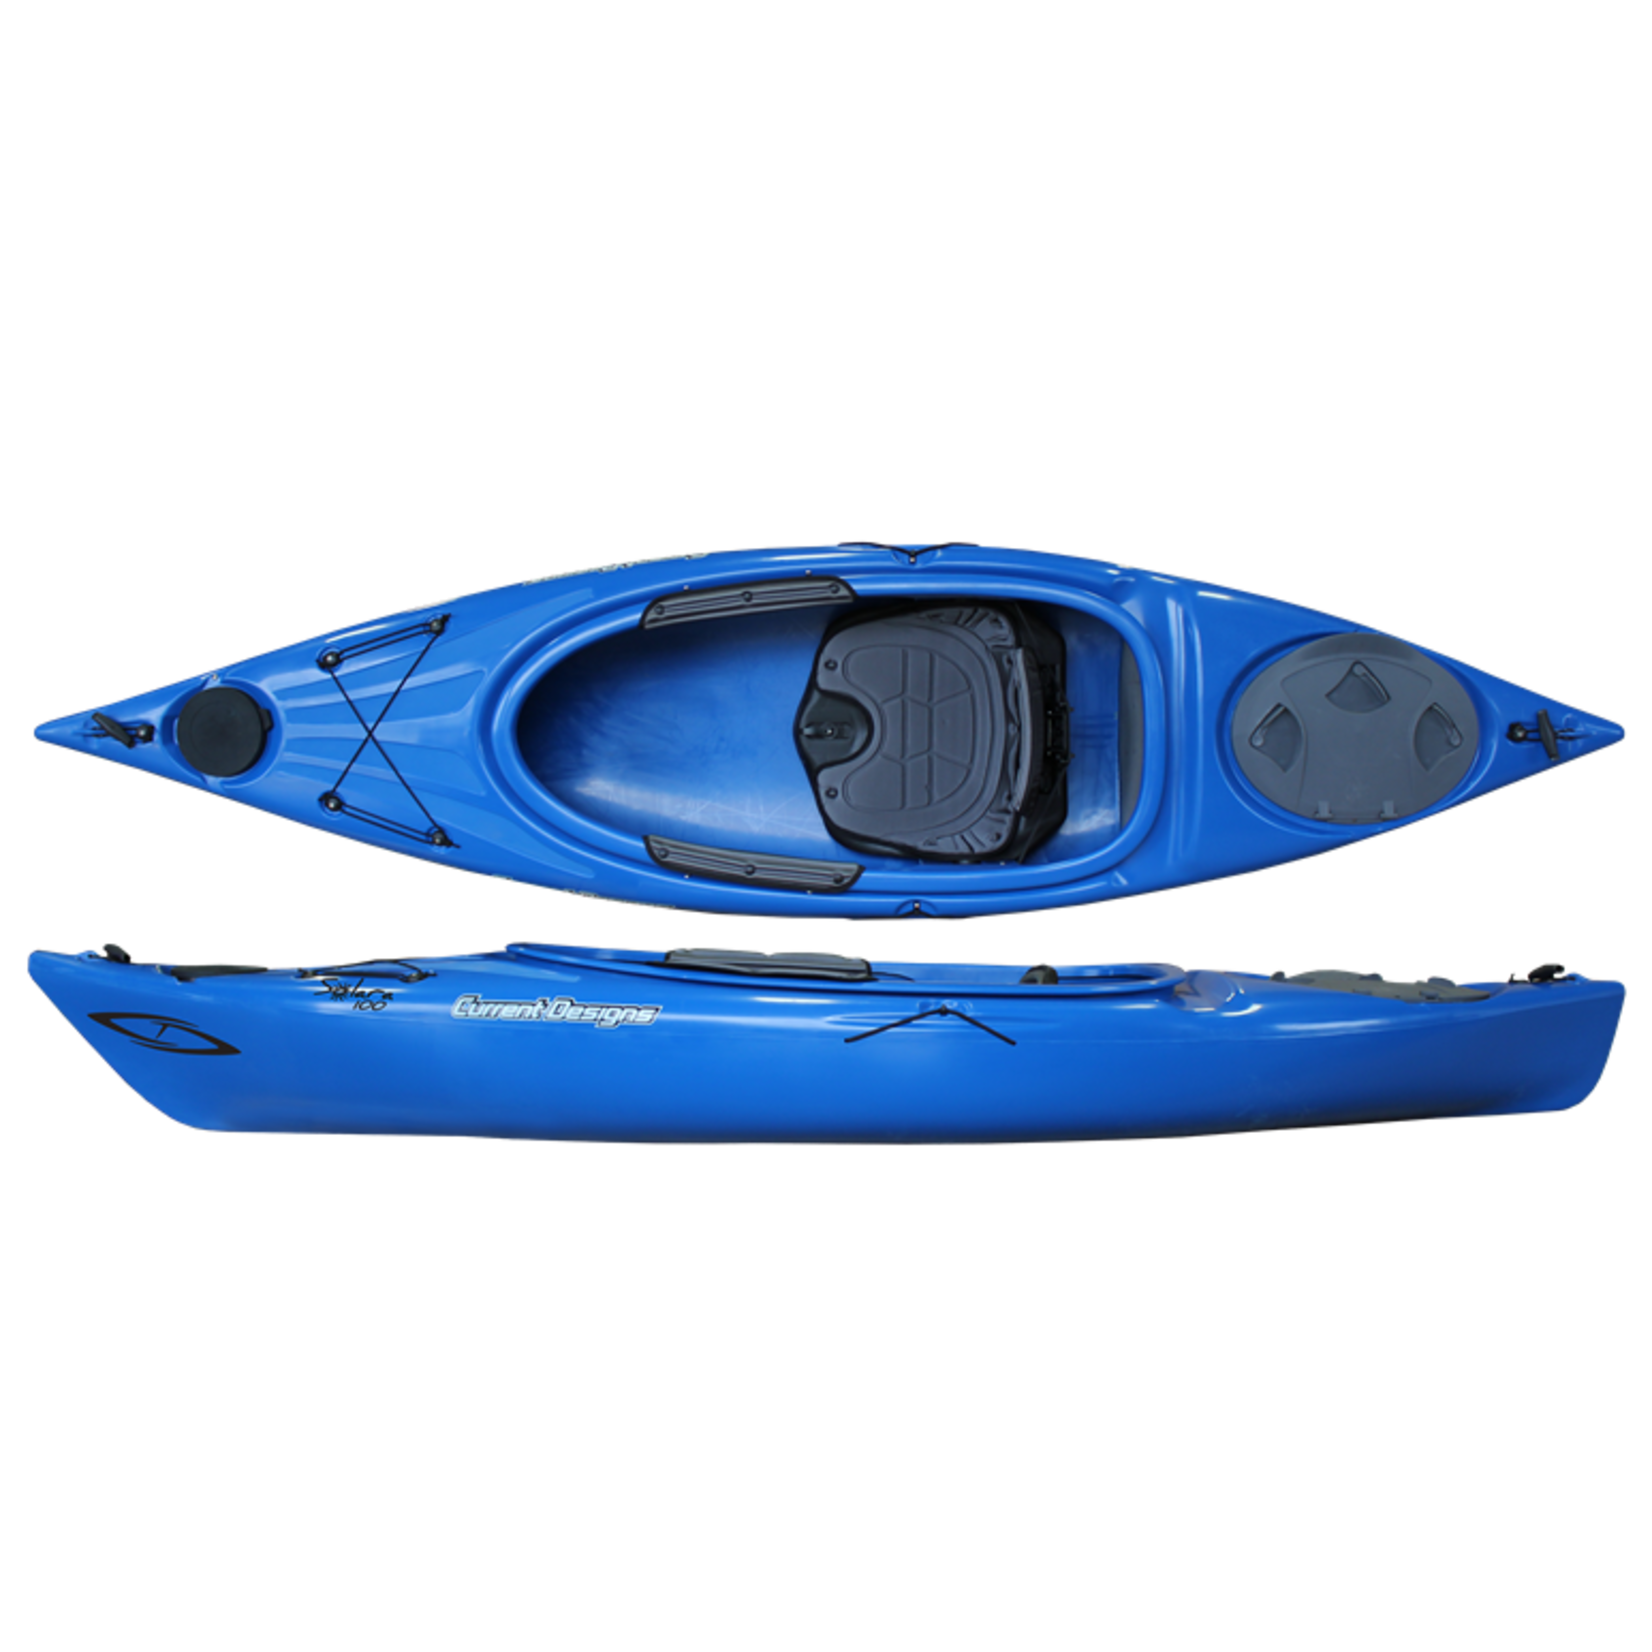 Current Designs Kayak récréatif Solara 100